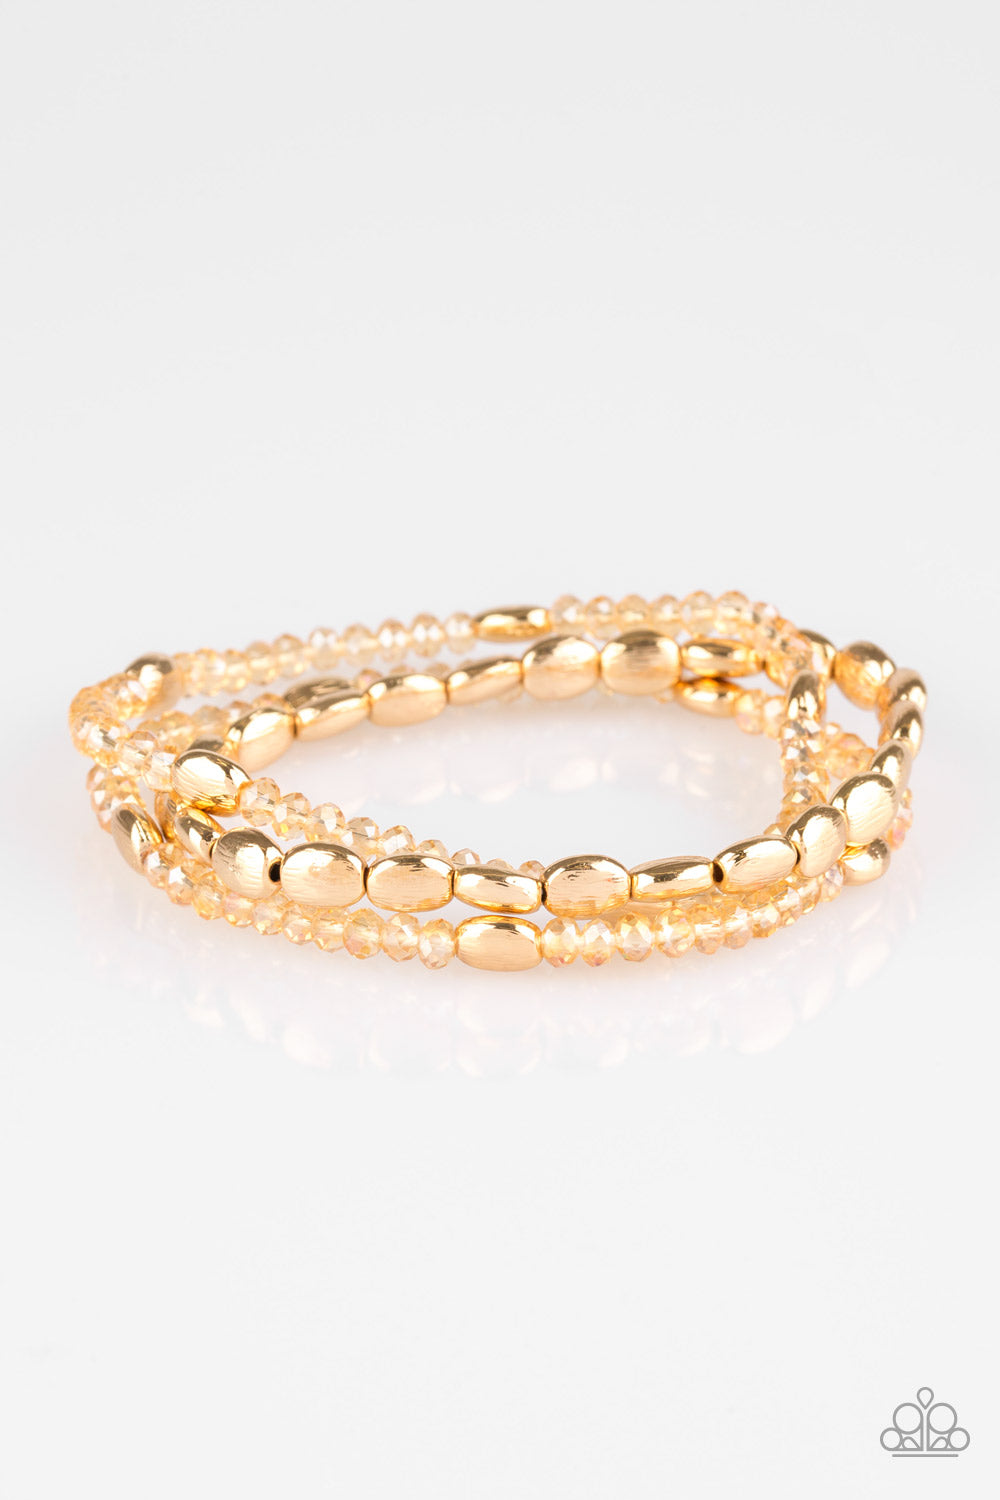 Hello Beautiful - Gold Bracelet freeshipping - JewLz4u Gemstone Gallery